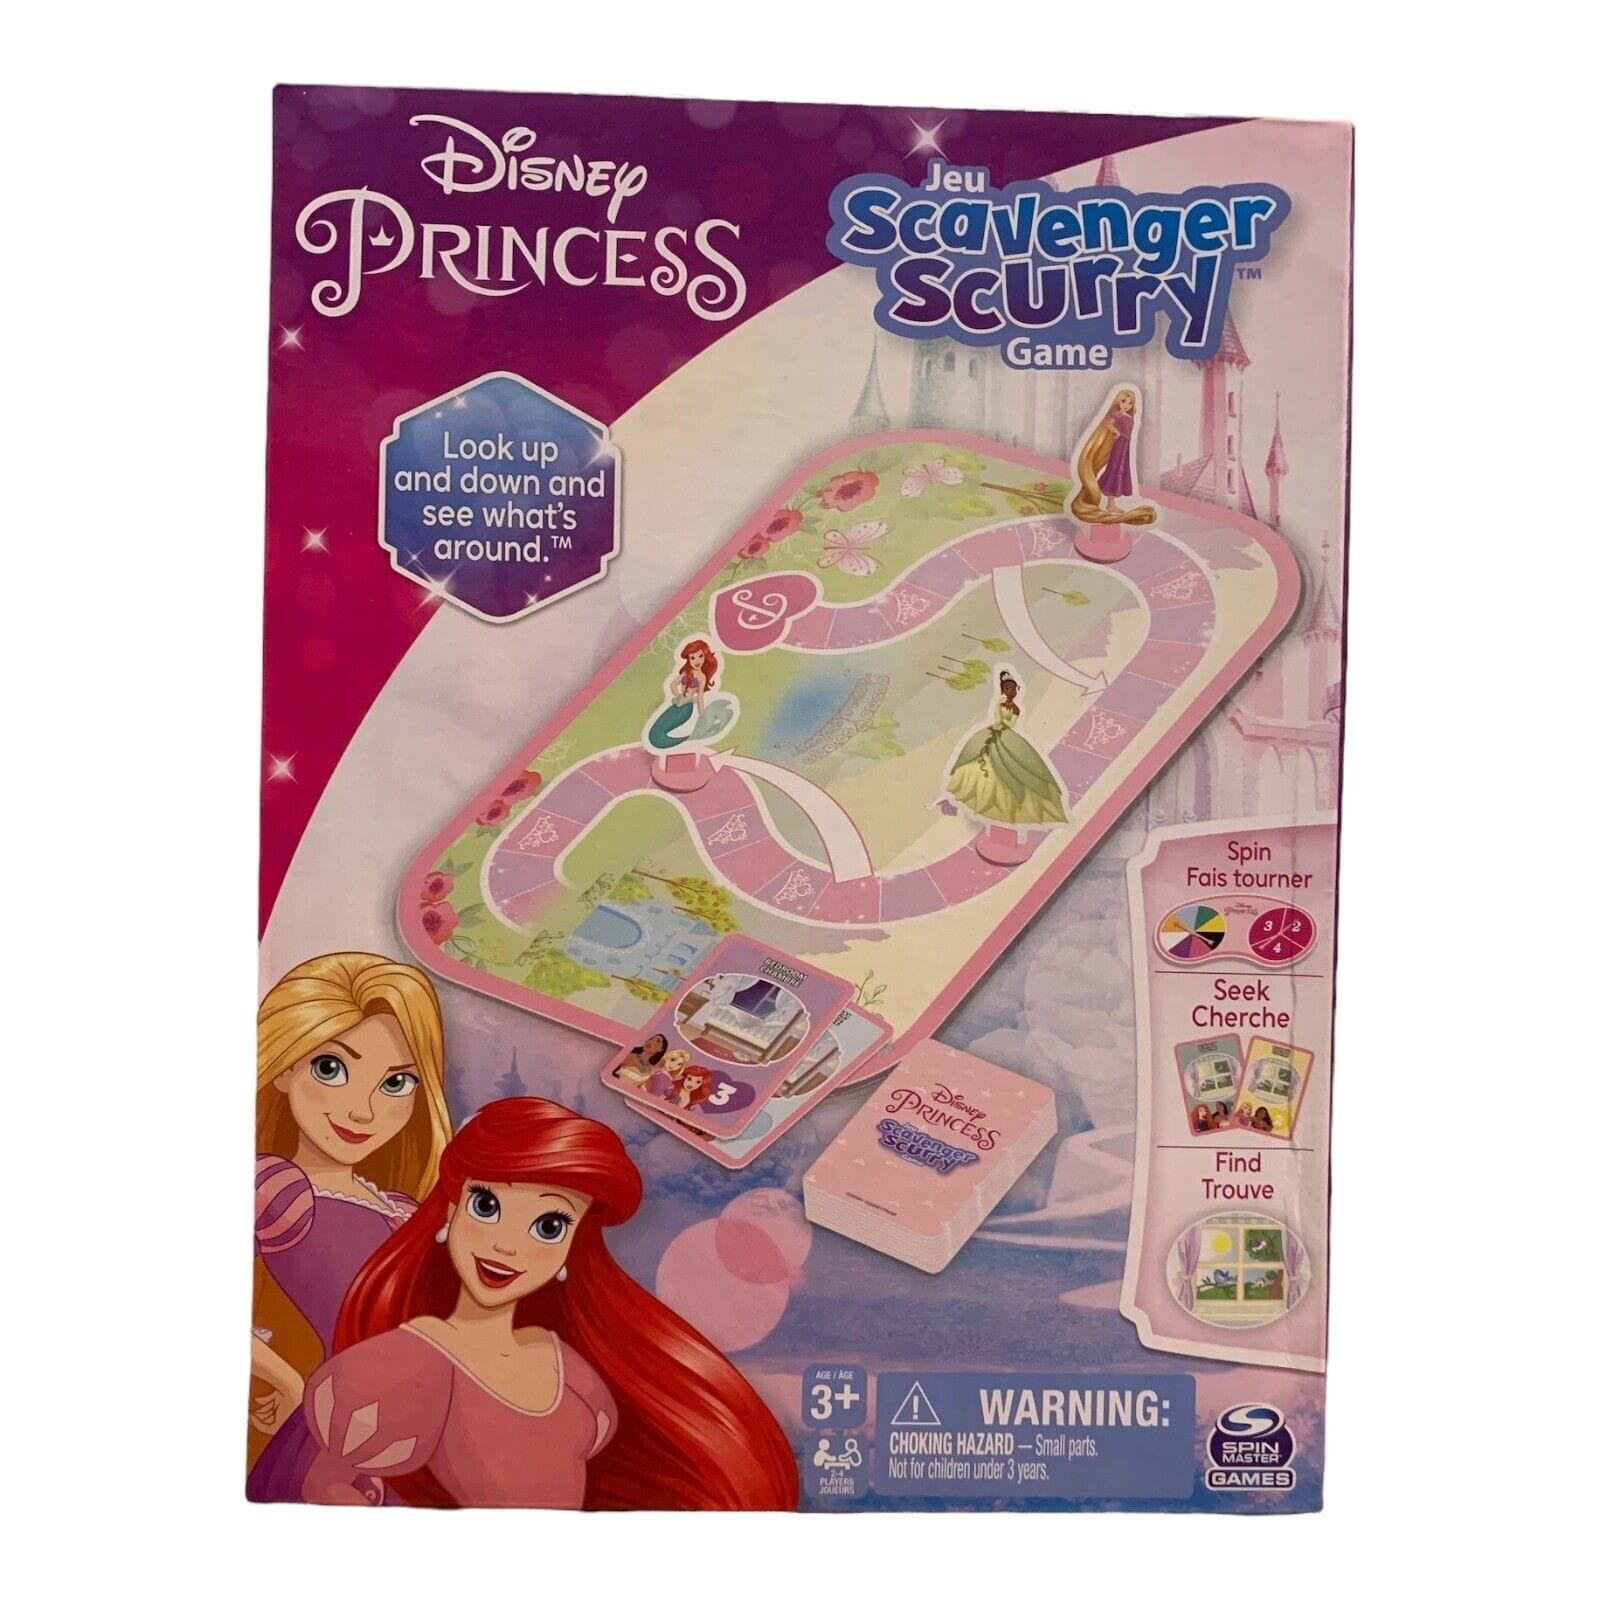 Disney Princess Scavenger Scurry Game